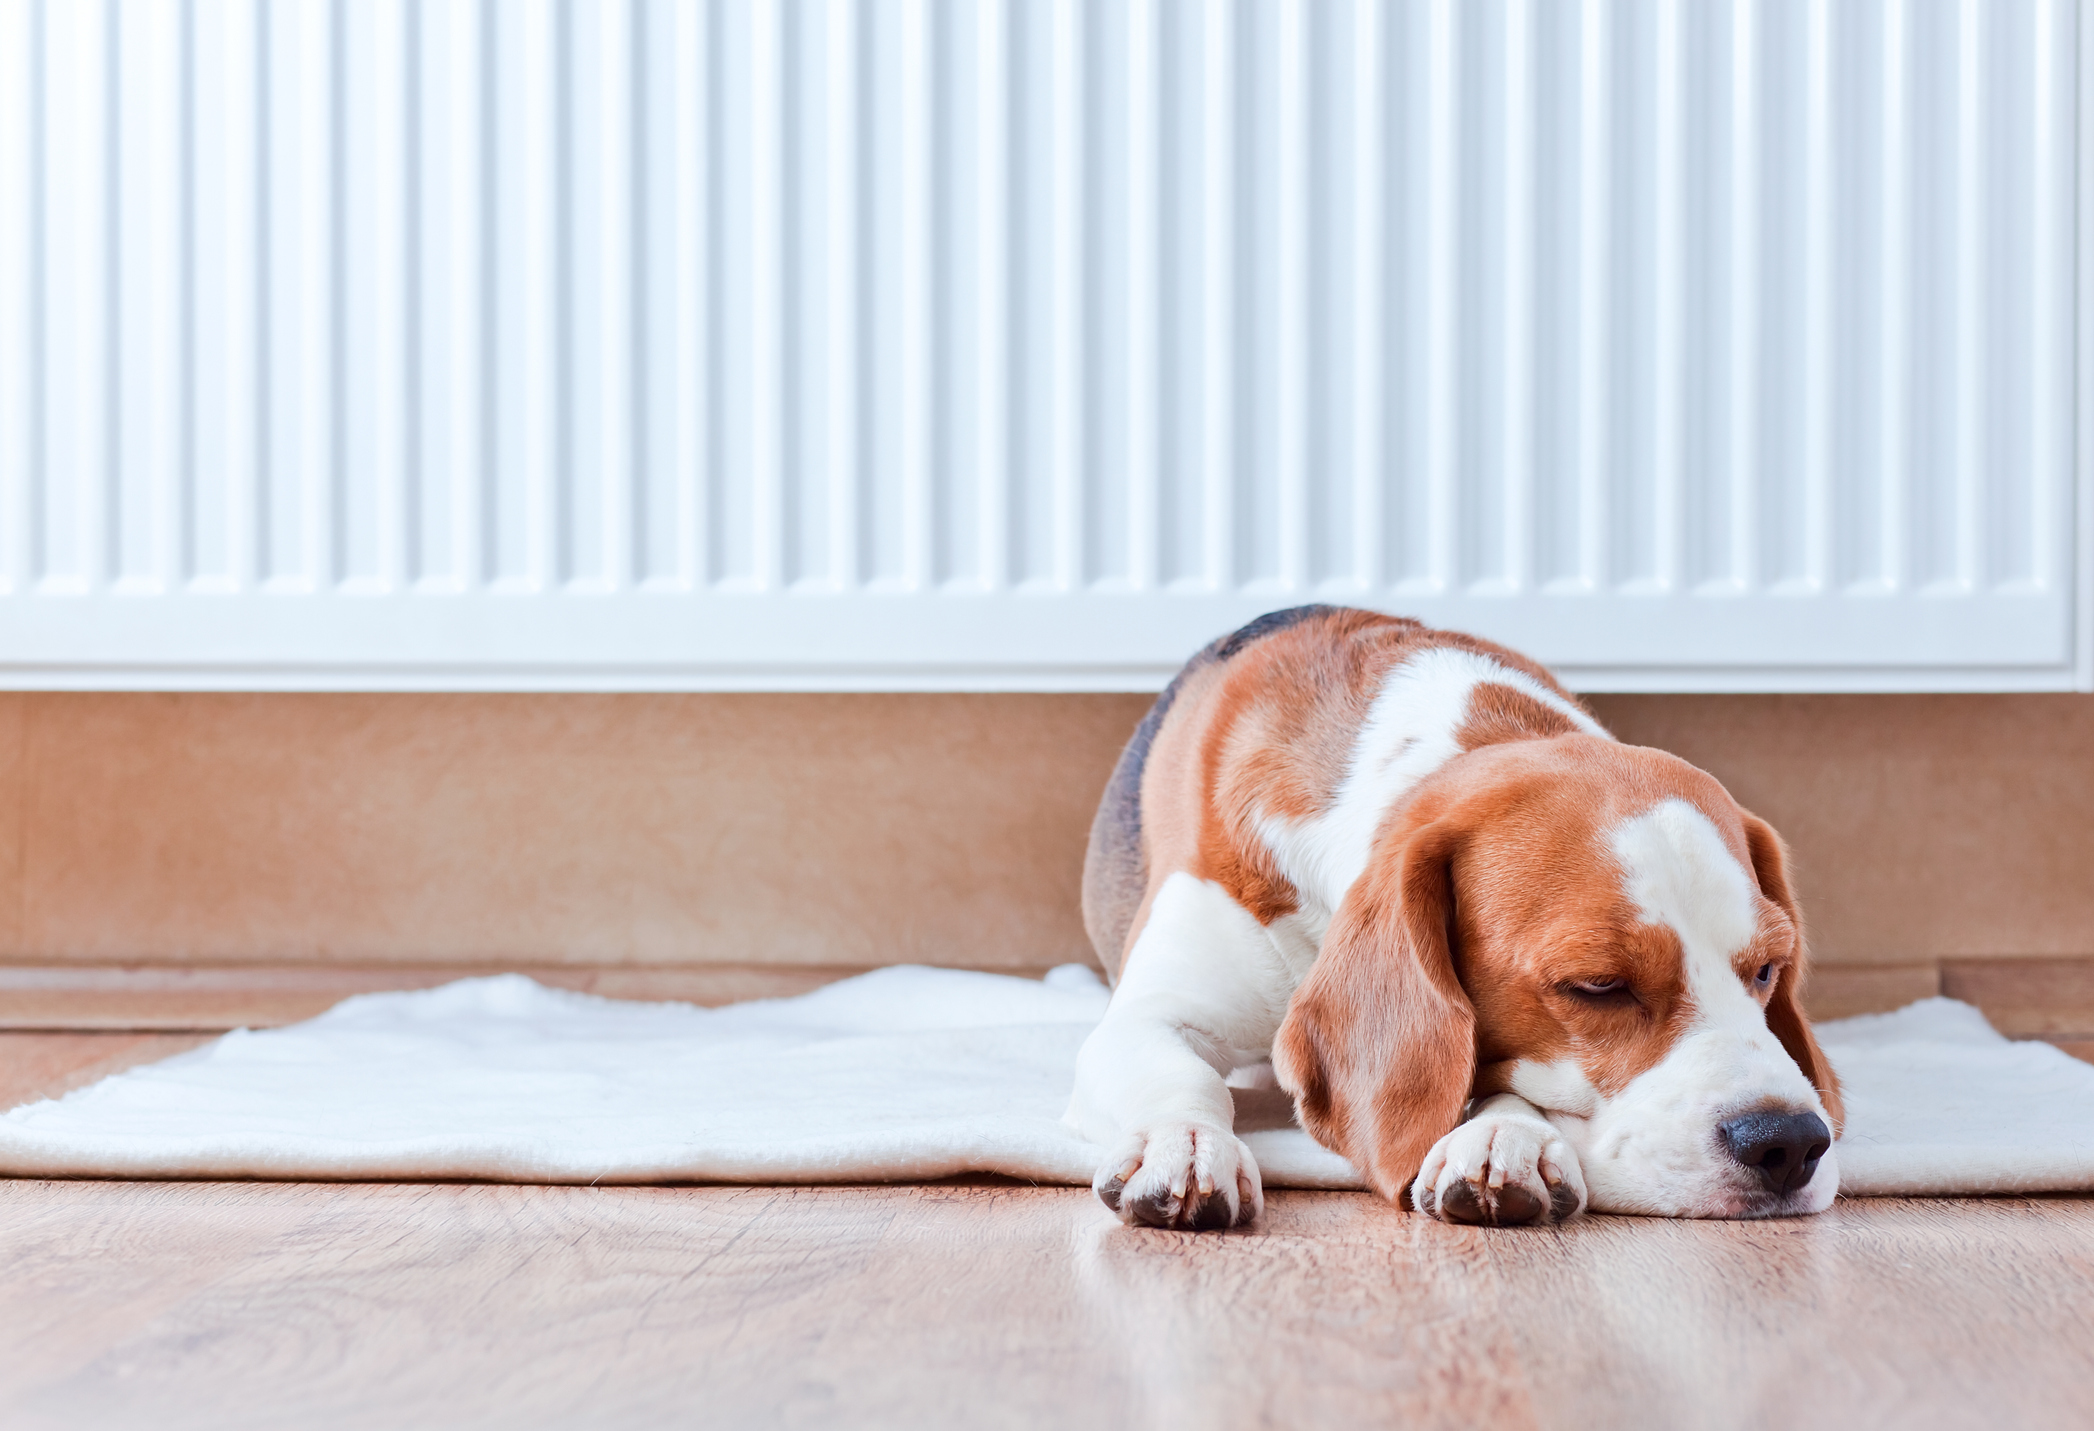 Dog on rug by radiator